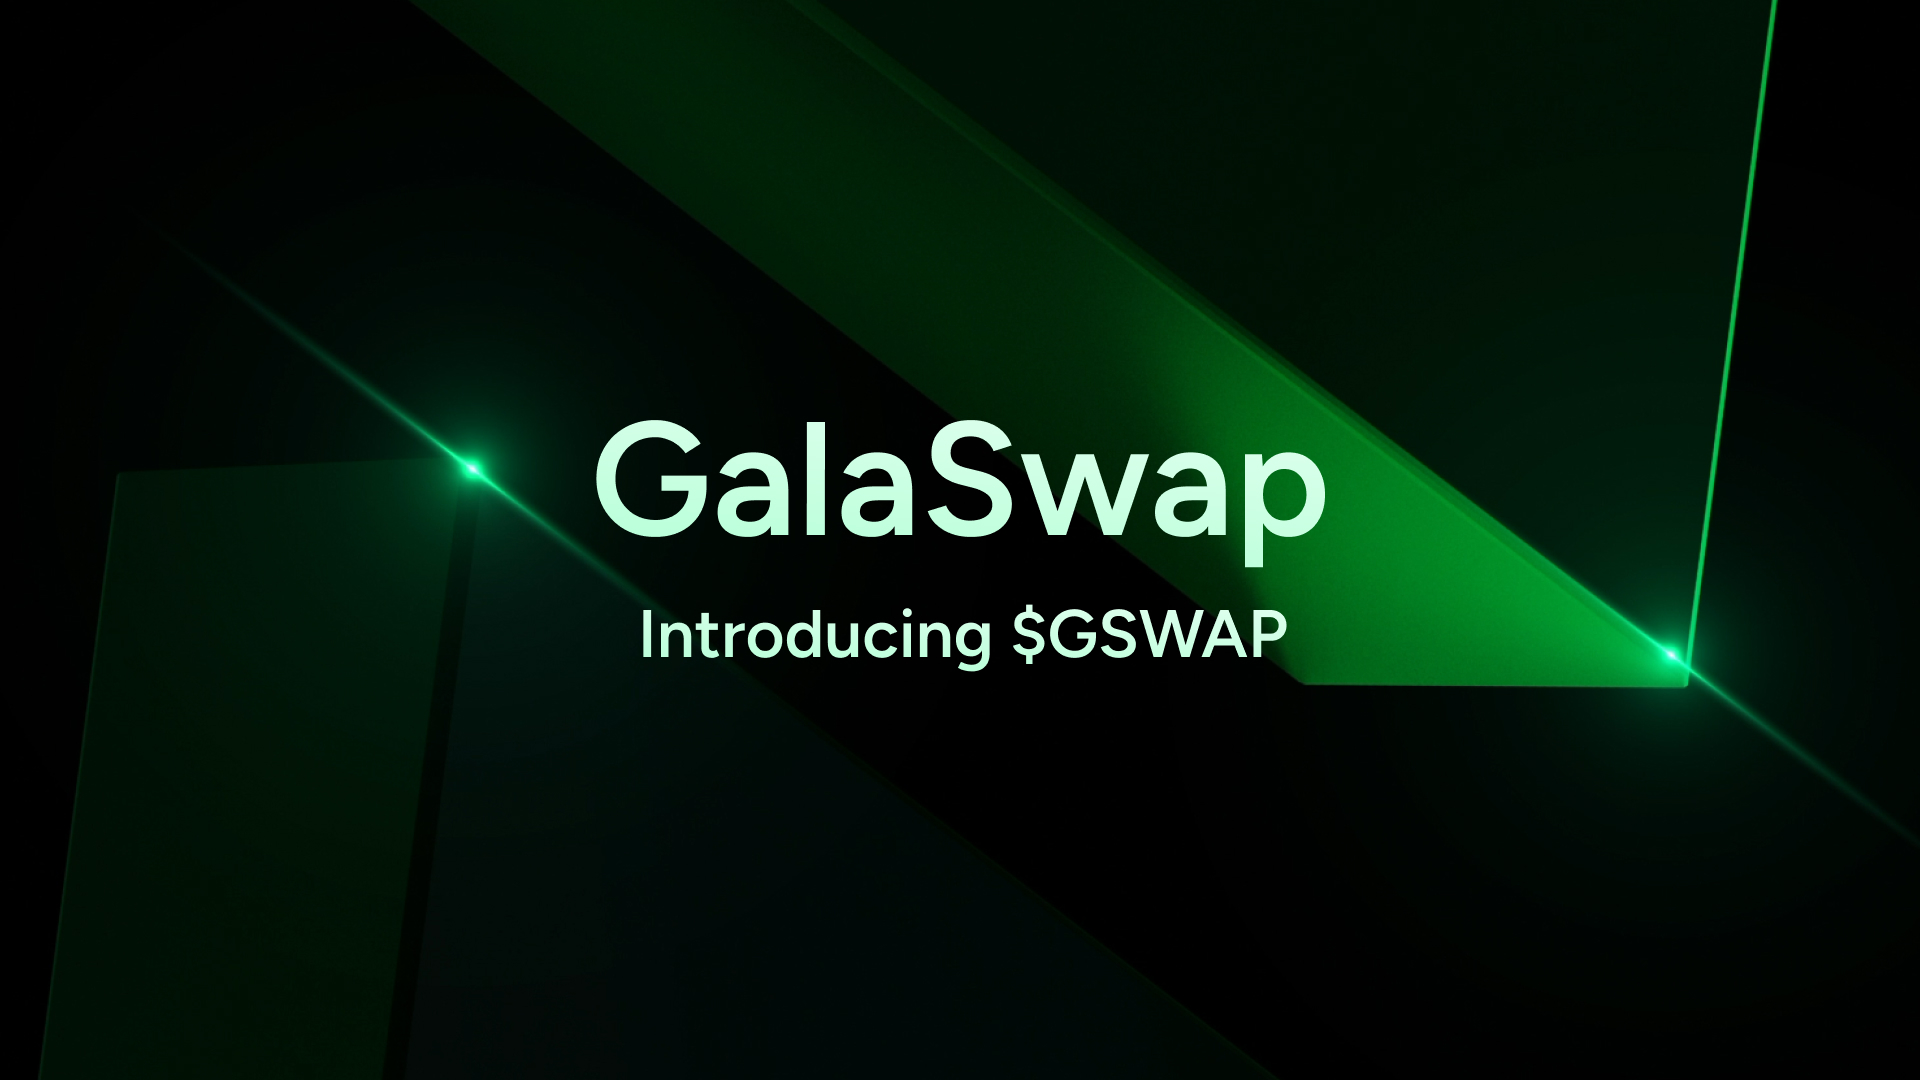 GalaSwap has introduced a new token called $GSWAP